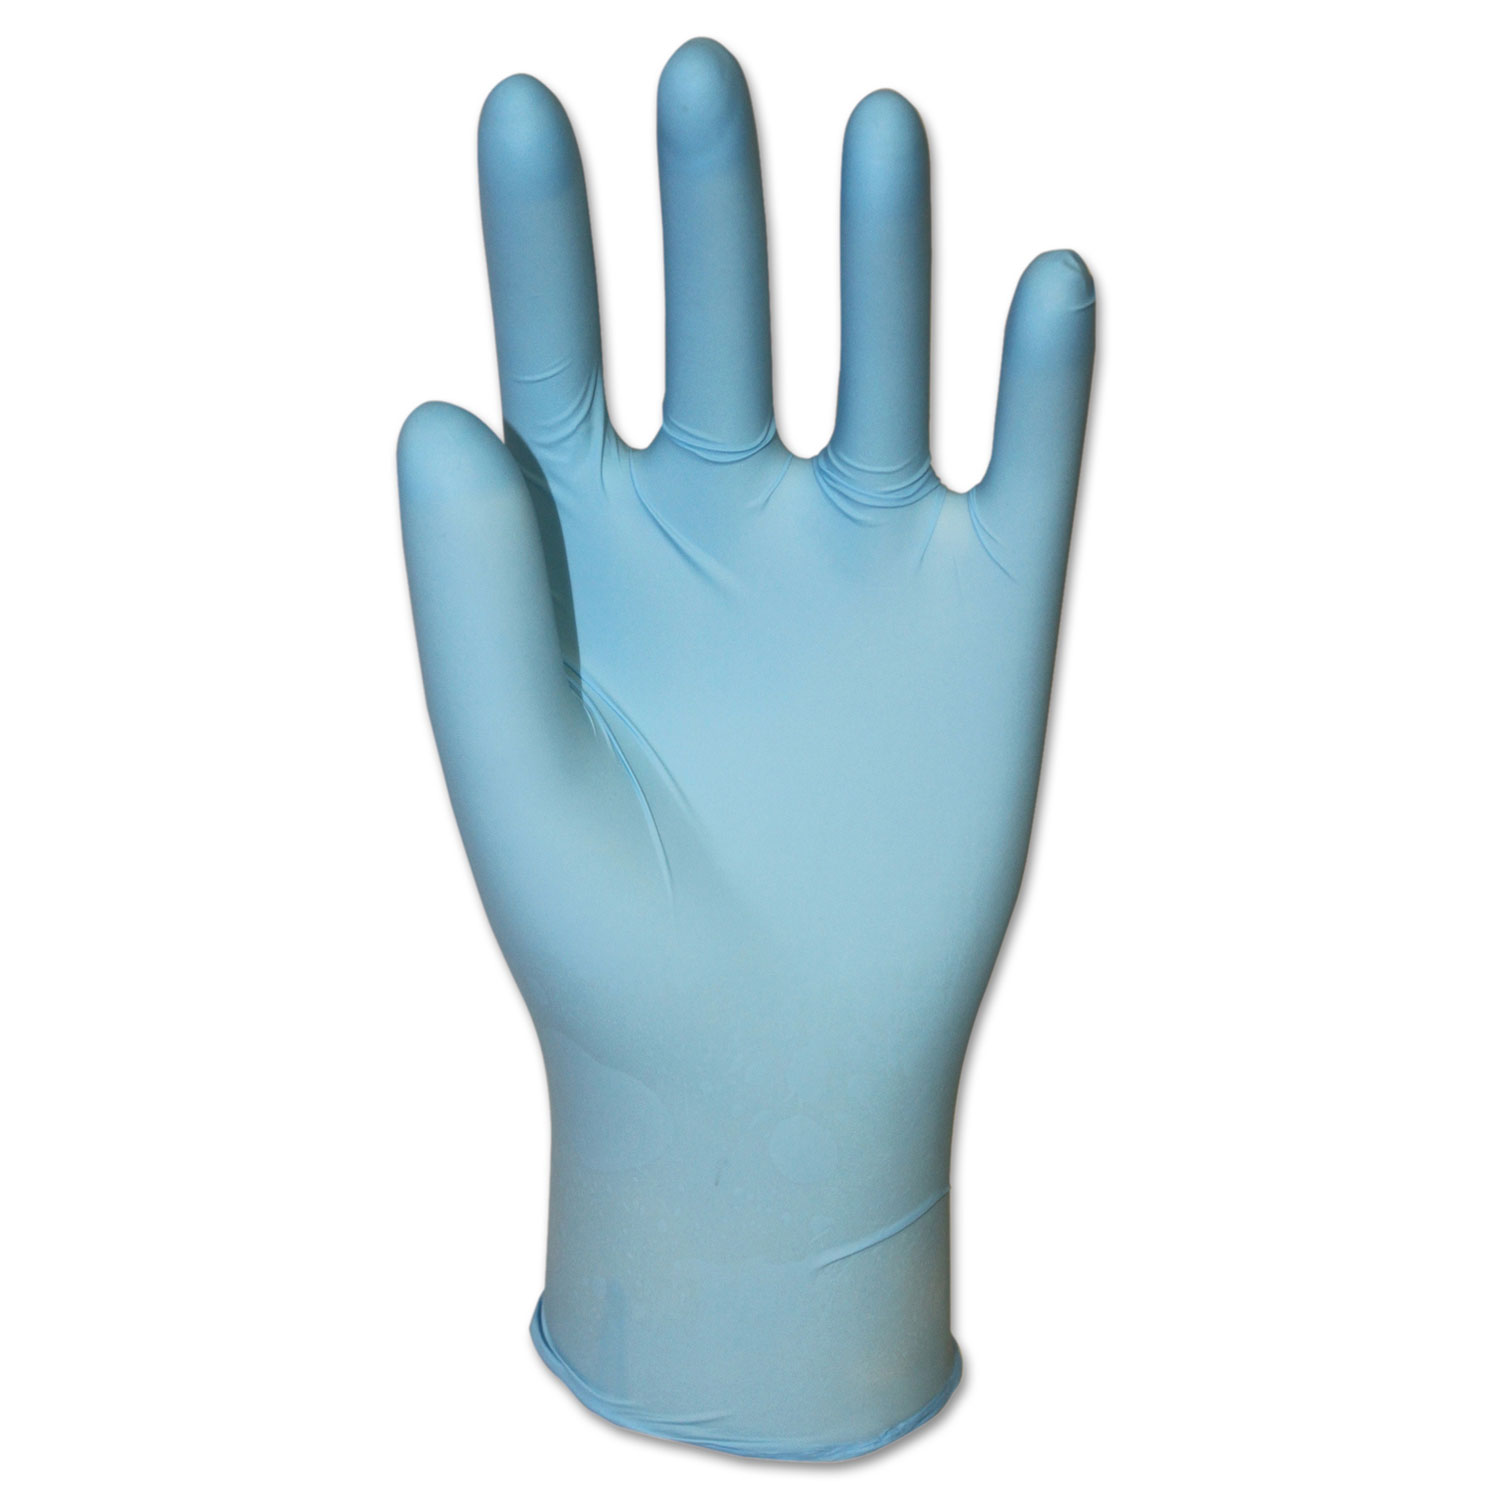  Impact IMP 8645XL DiversaMed Disposable Powder-Free Exam Nitrile Gloves, Blue, X-Large, 100/Box, 10 Boxes/Carton (IMP8645XL) 